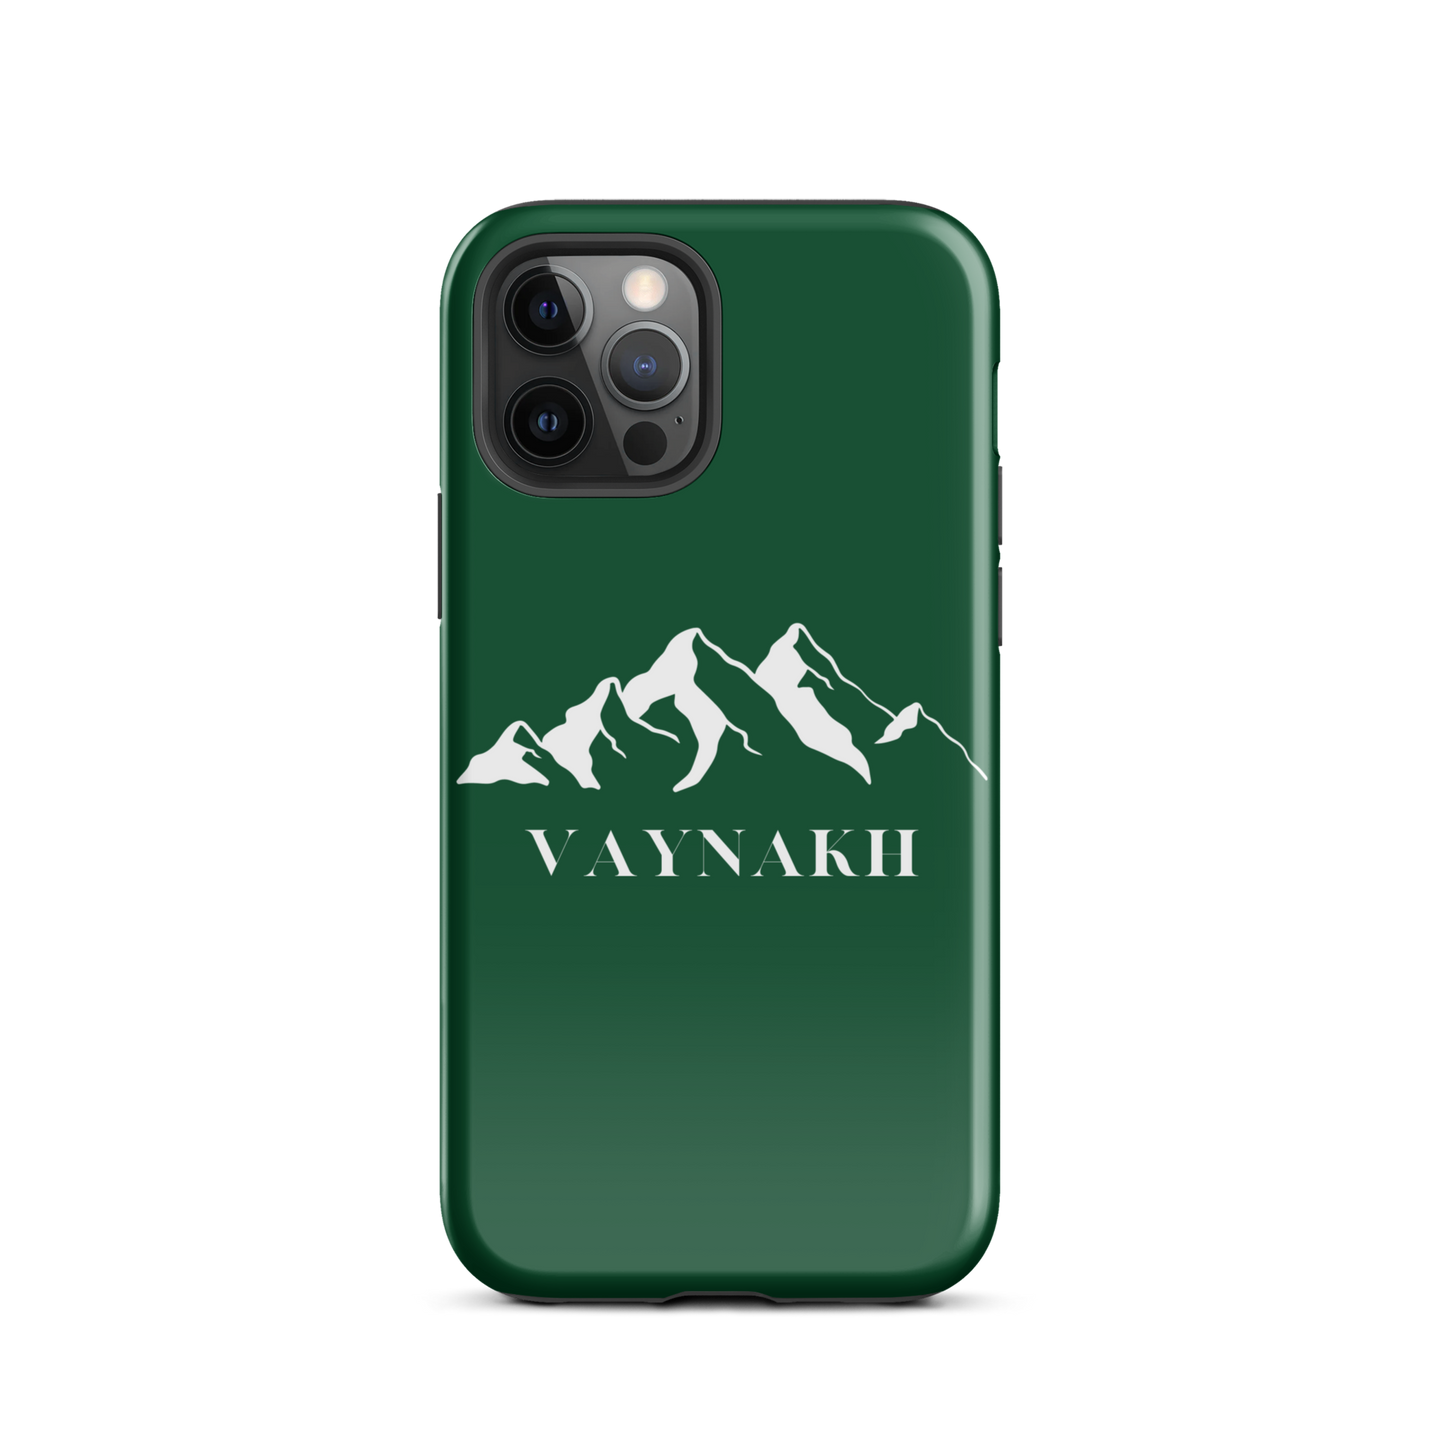 VAYNAKH - Green